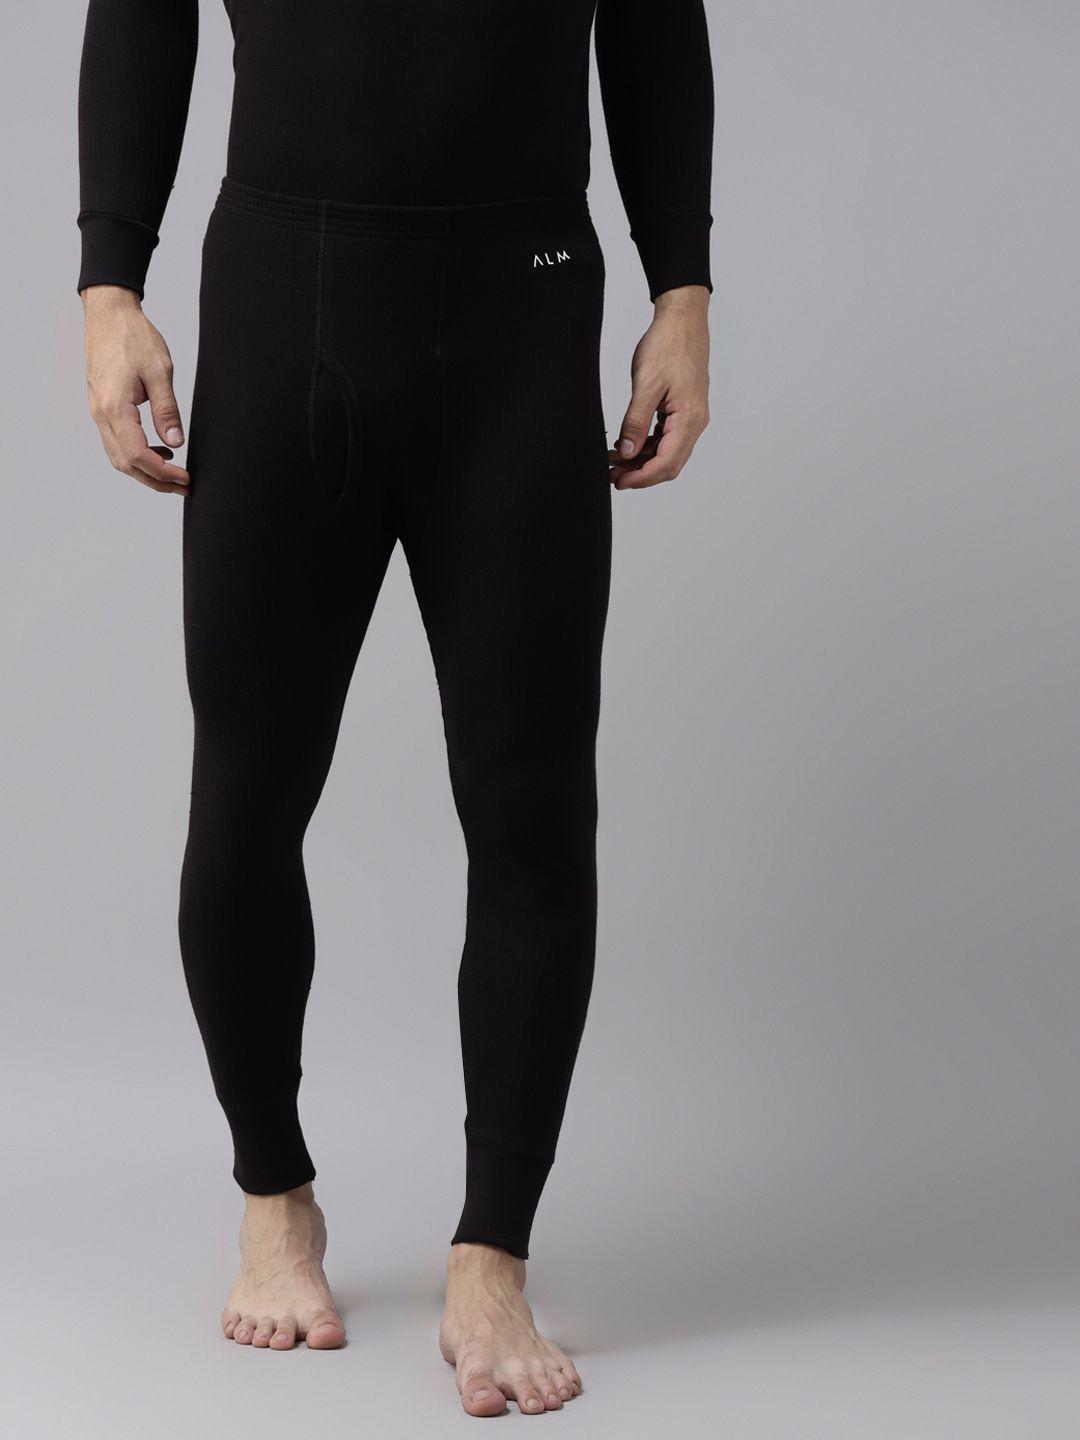 almo wear men black solid ultra- warm snug fit lightweight thermal bottom